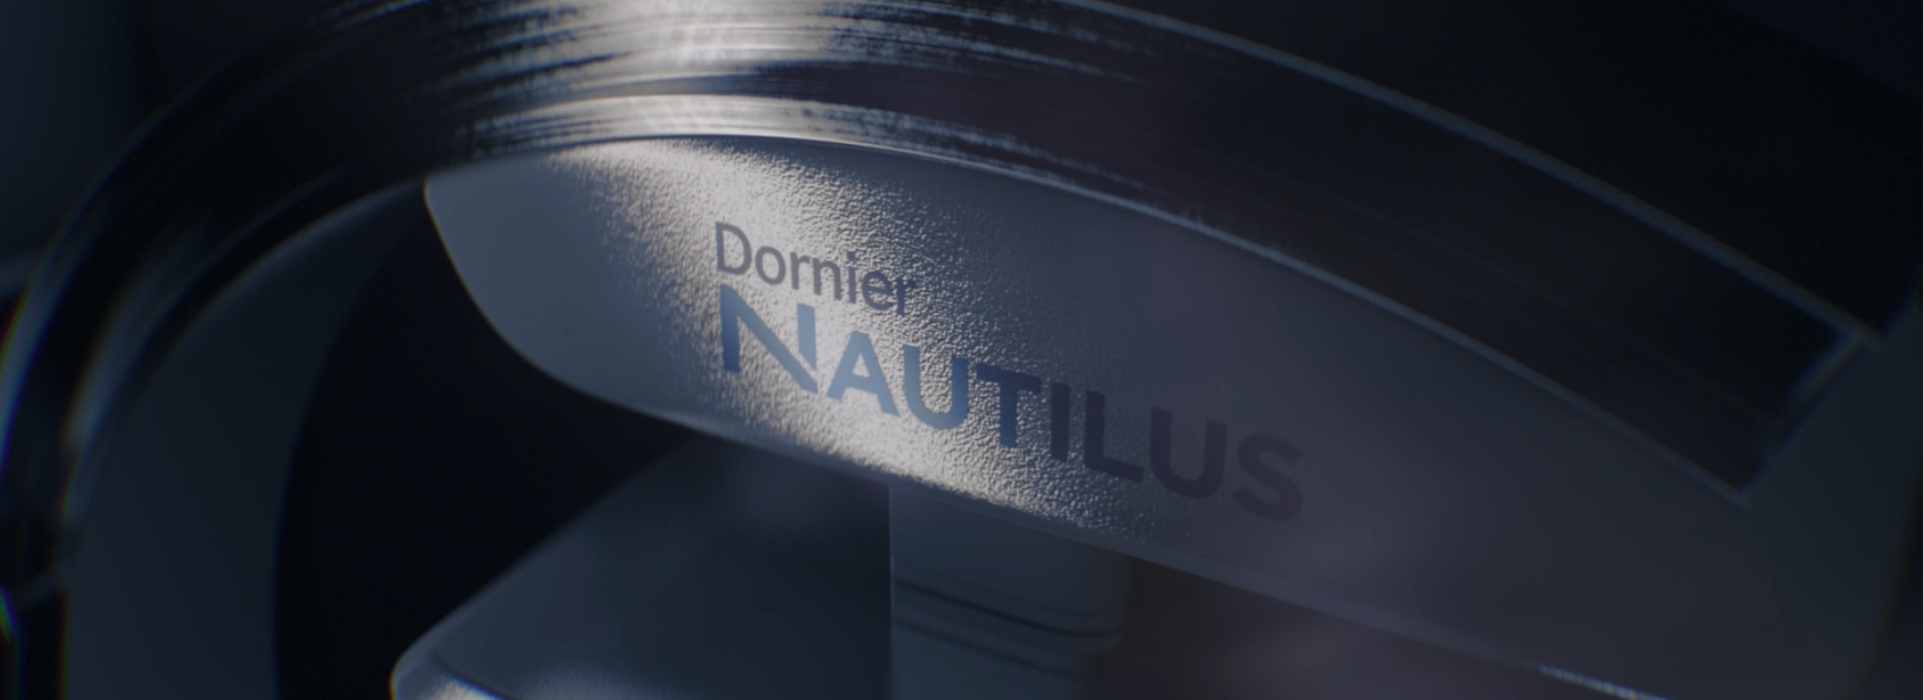 Nautilus Video Placeholder.jpg